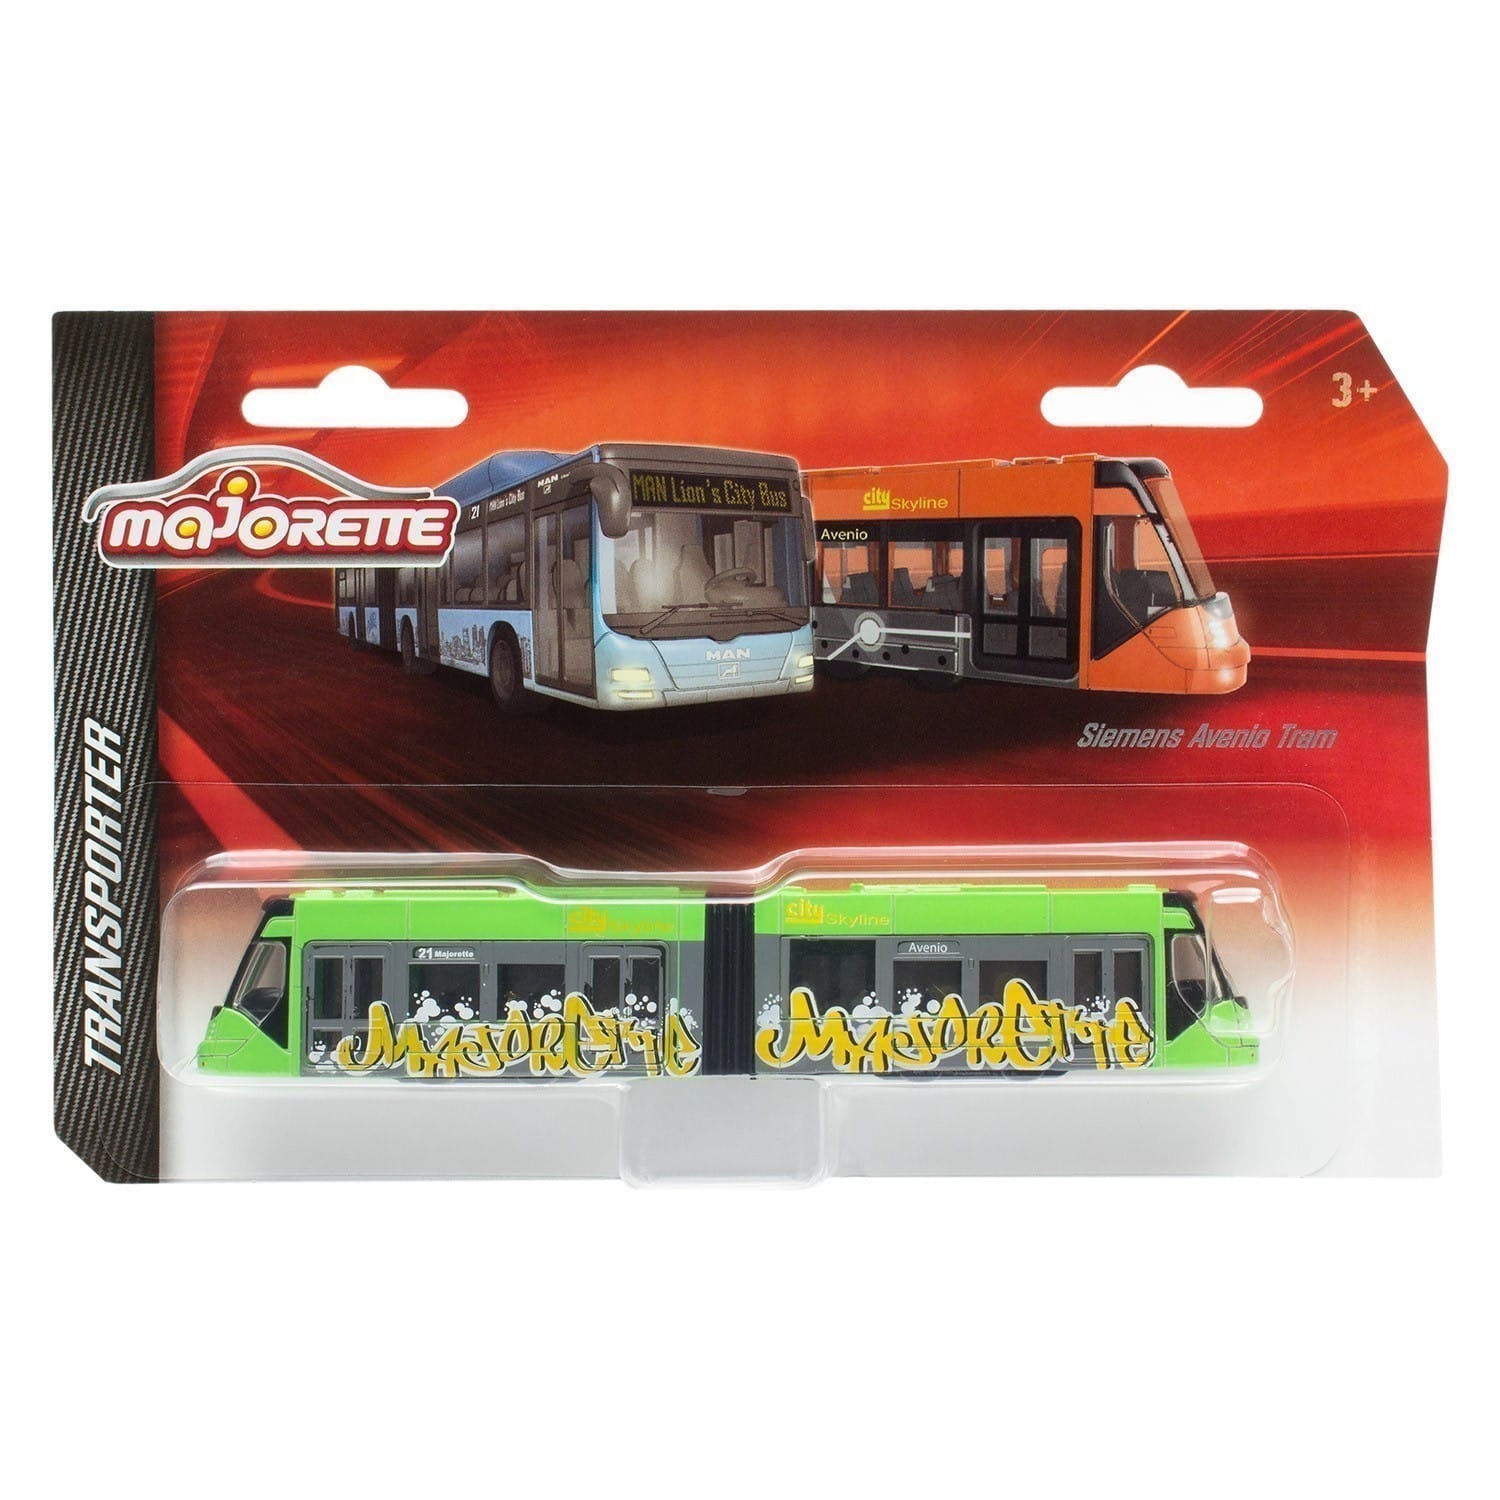 Majorette - Die-Cast Siemens Avenio Tram - Green